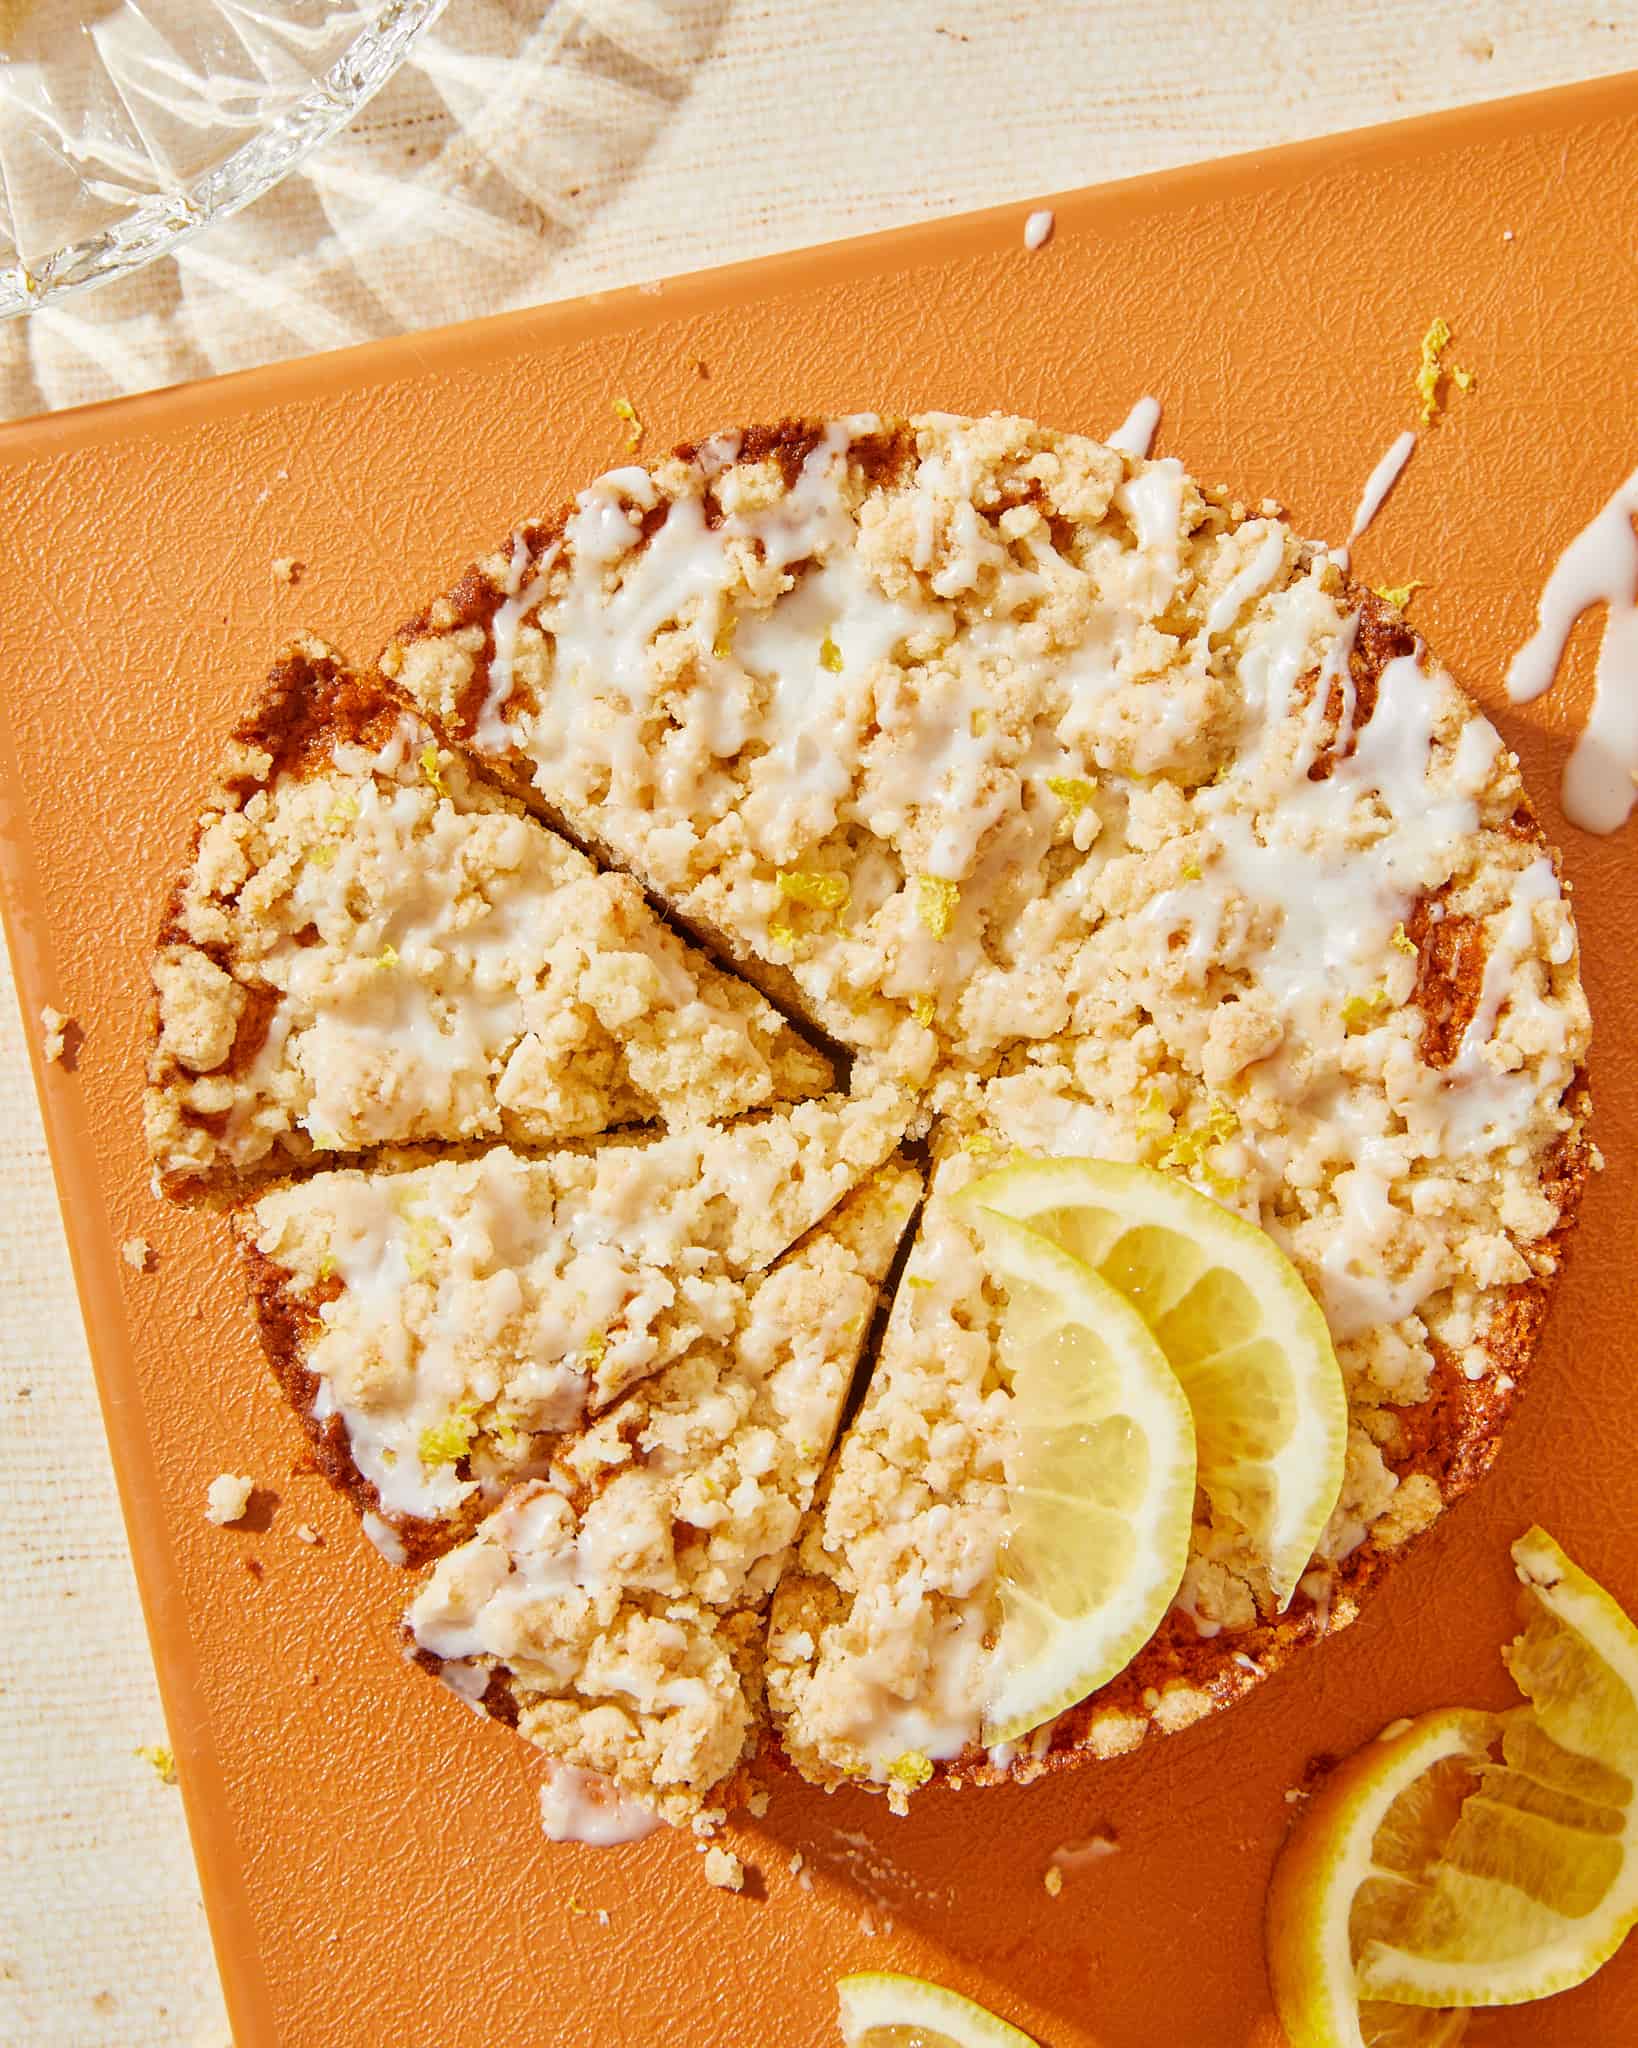 Vegan lemon crumb cake cut into slices on orange cutting board